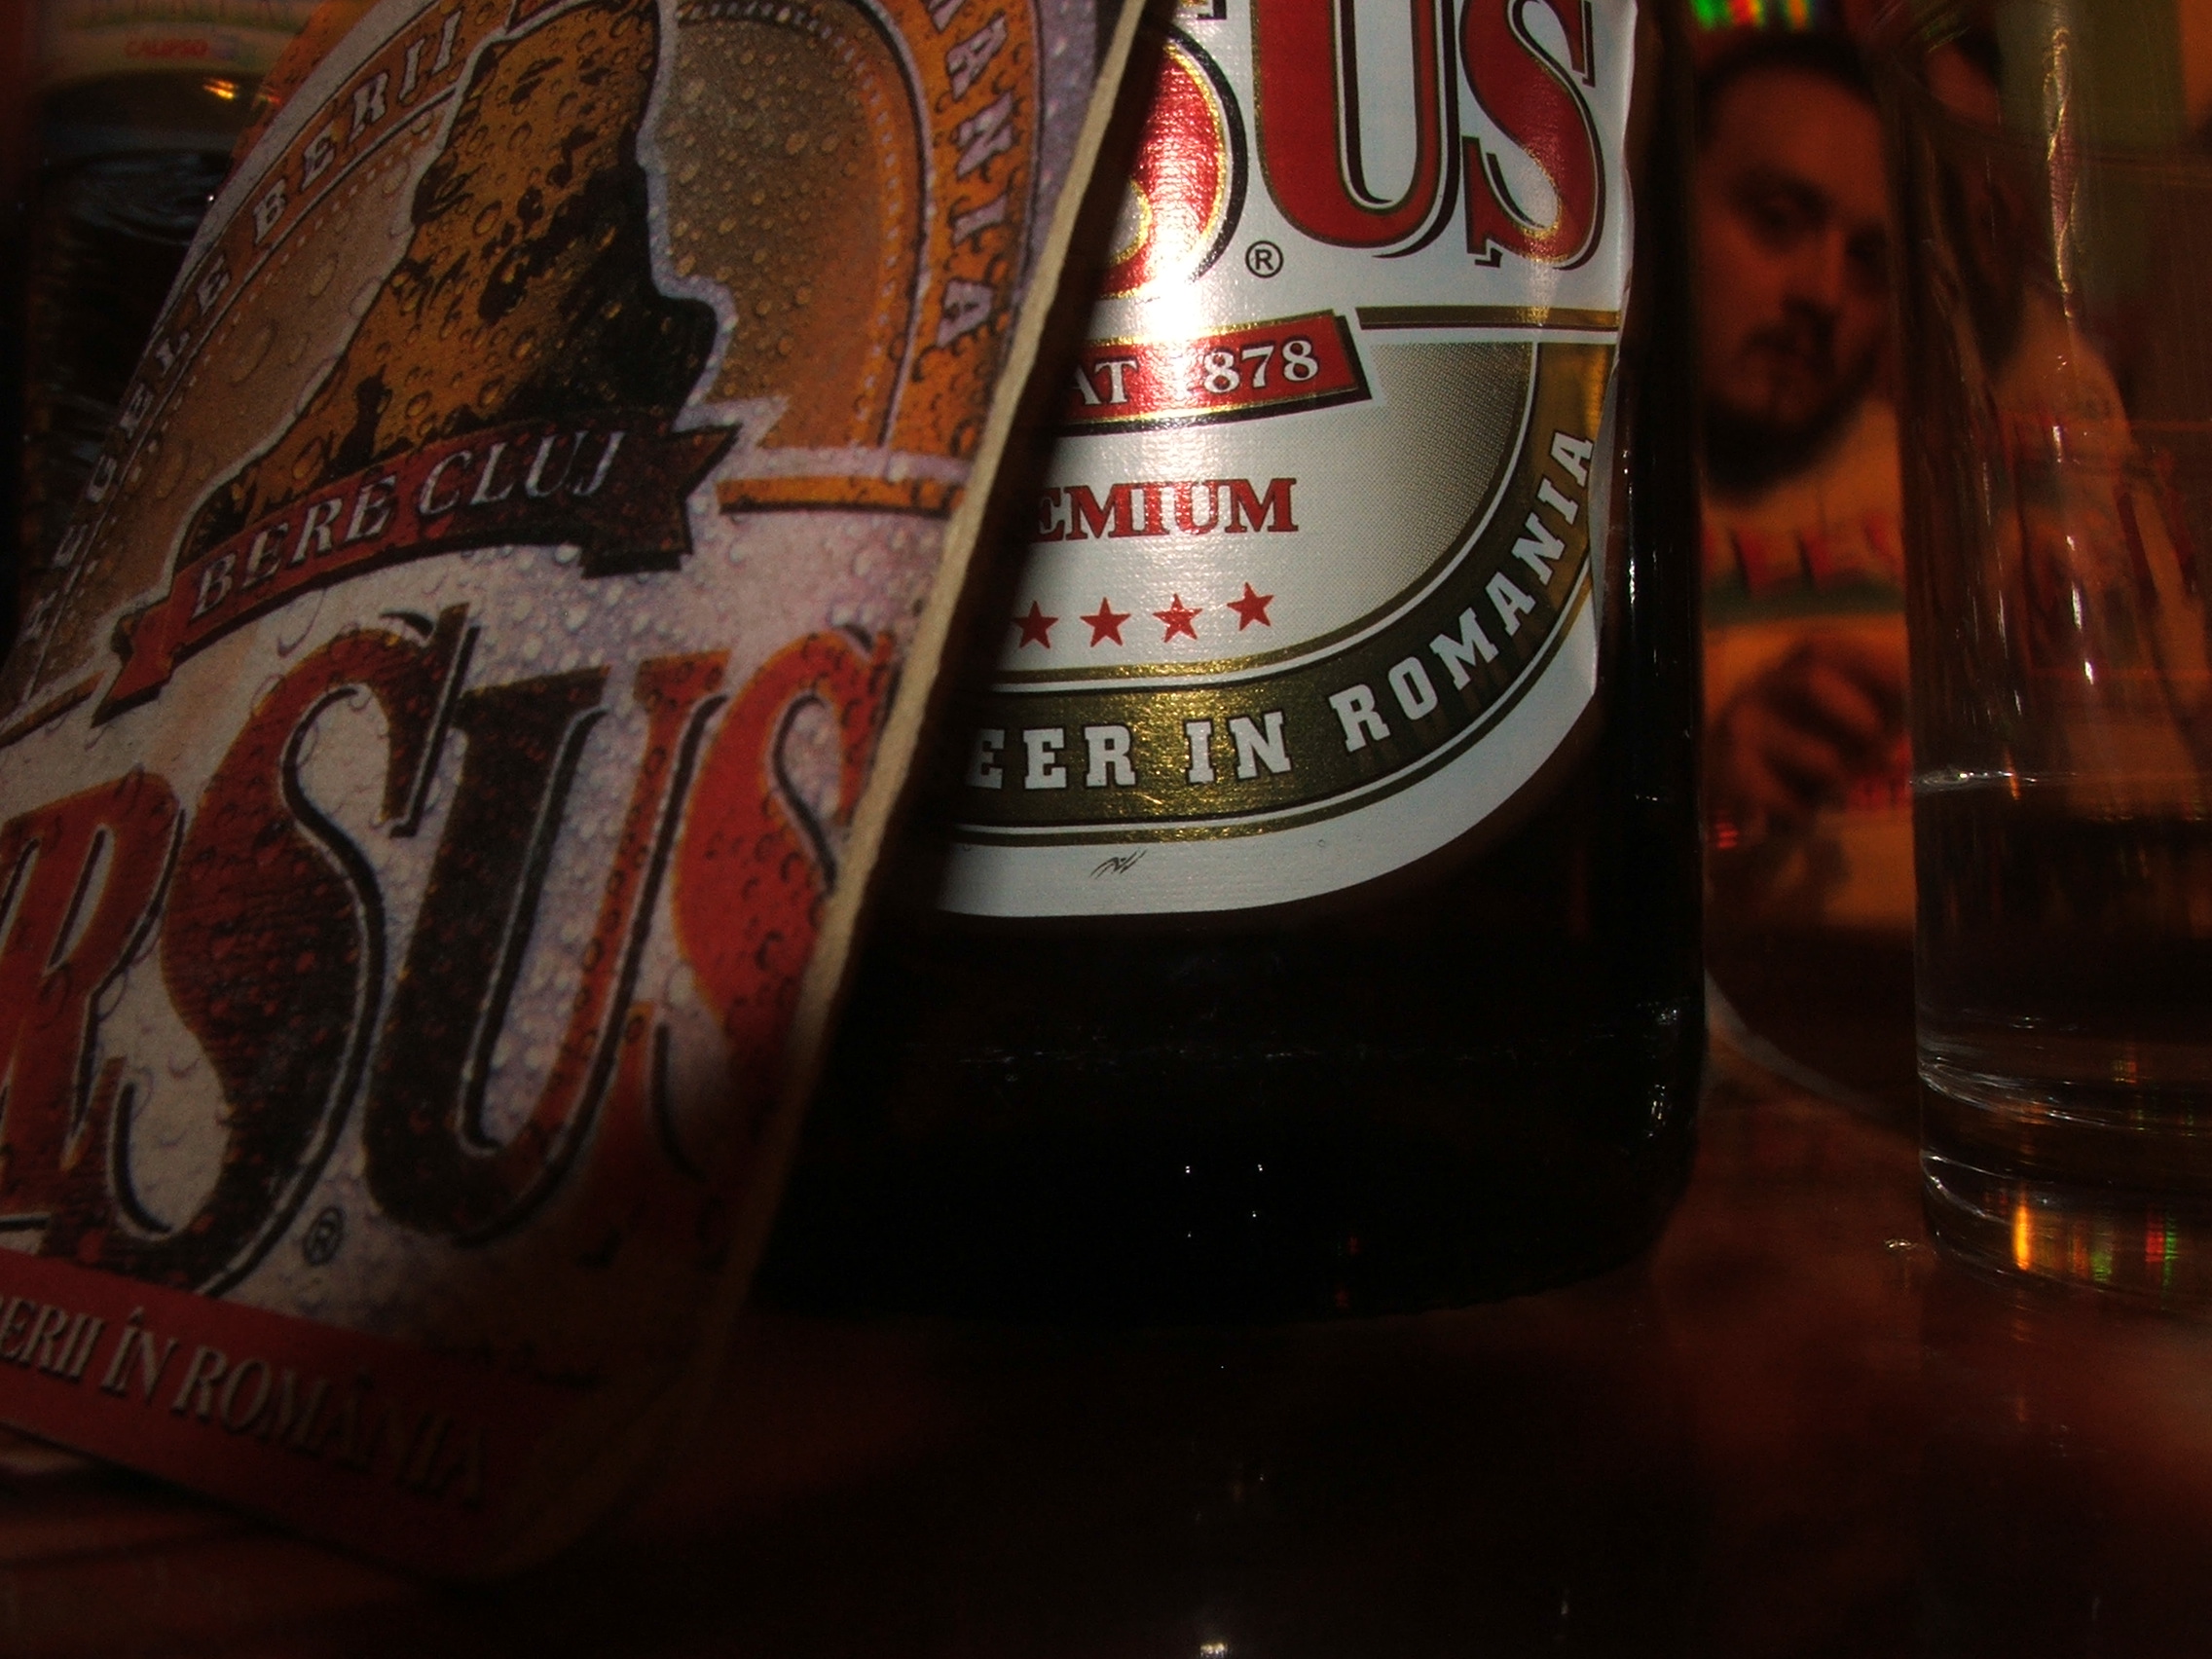 ursus-bottle-and-slipmat@shmen